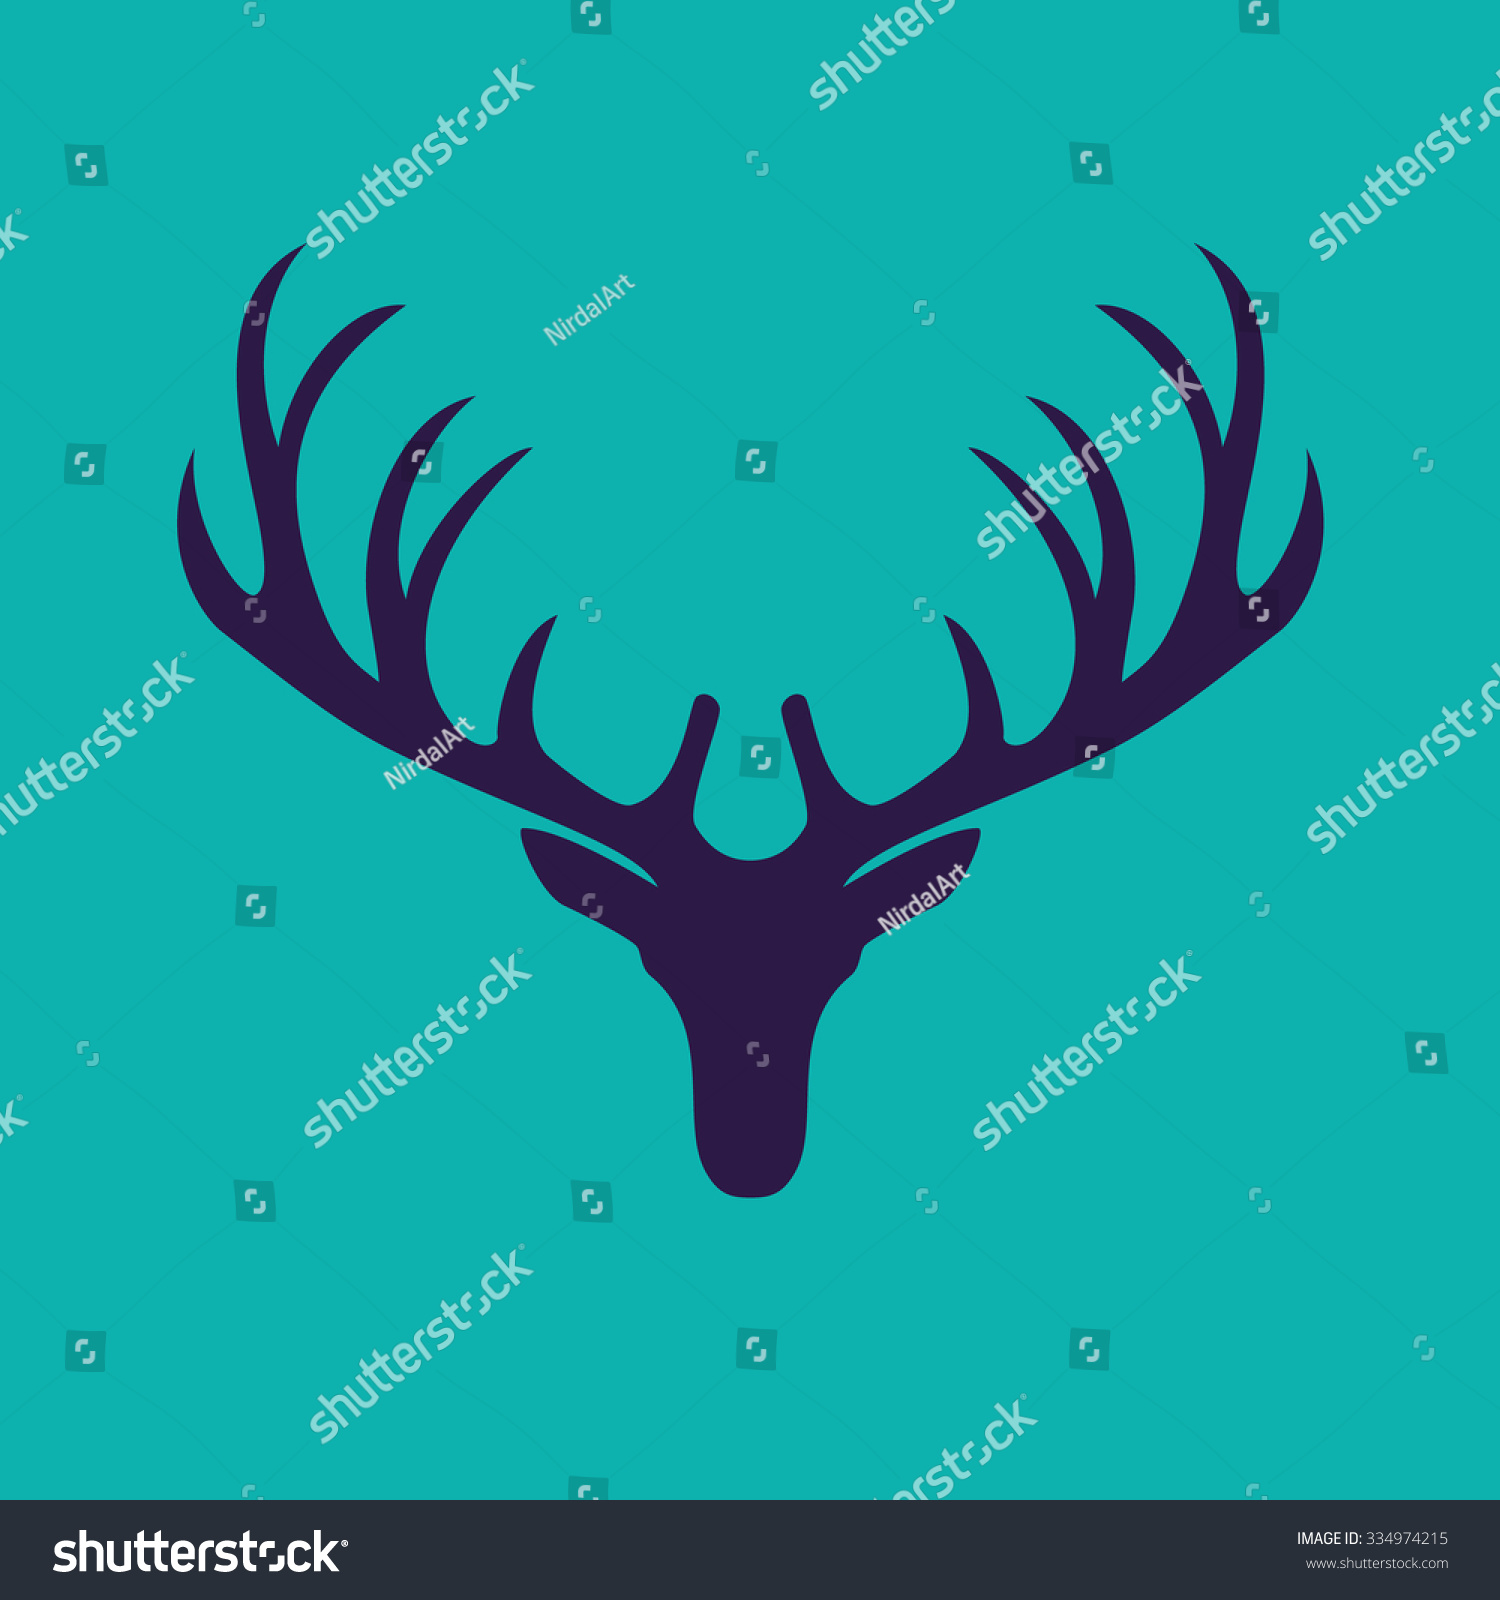 Illustration Deer Head Silhouette Stock Vector Royalty Free 334974215 8601